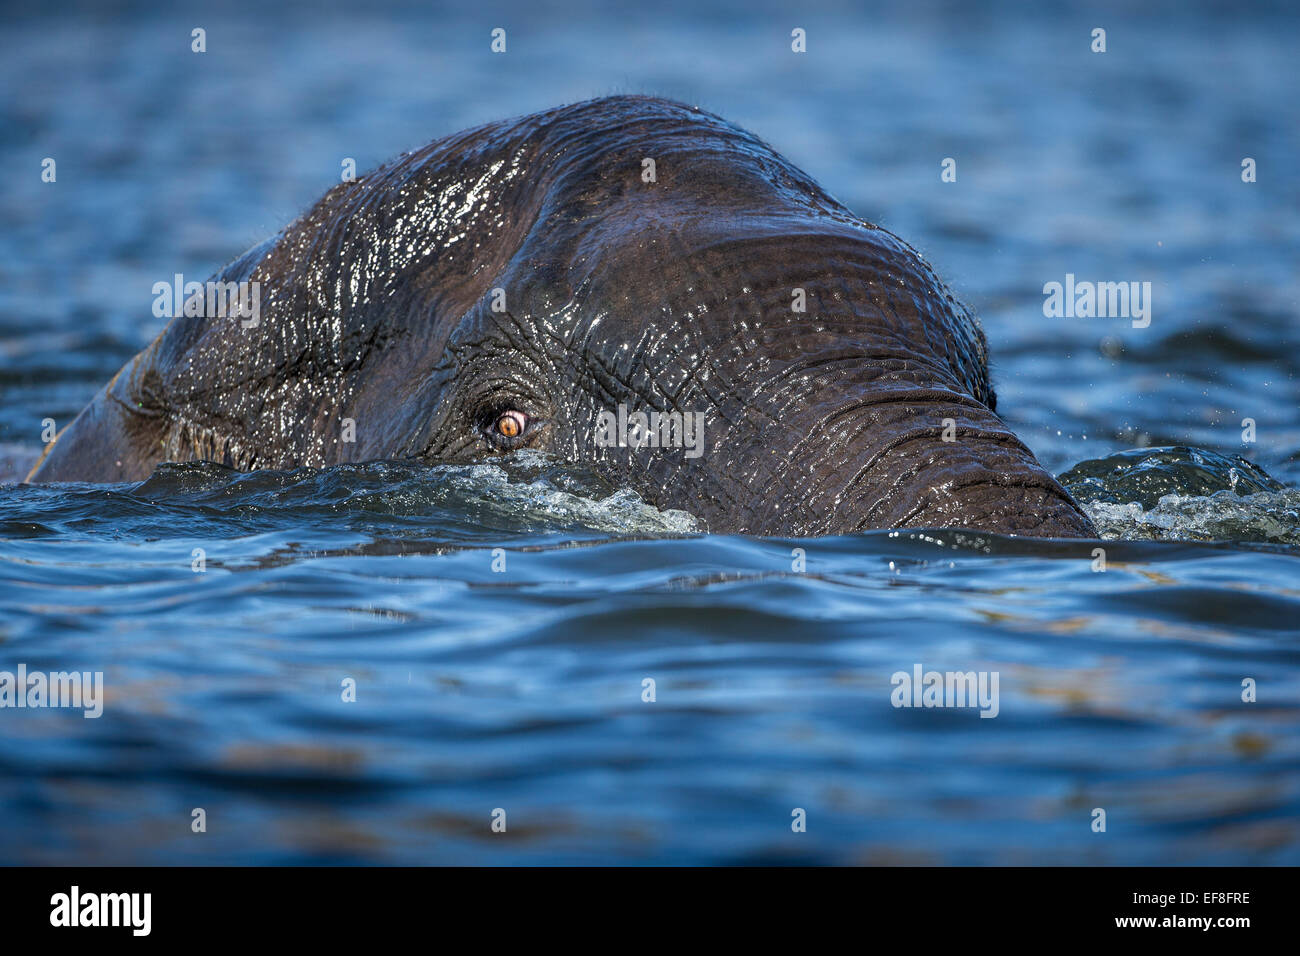 Africa, Botswana, Chobe National Park, African Elephant (Loxodonta africana) swimming submerged in Chobe River Stock Photo